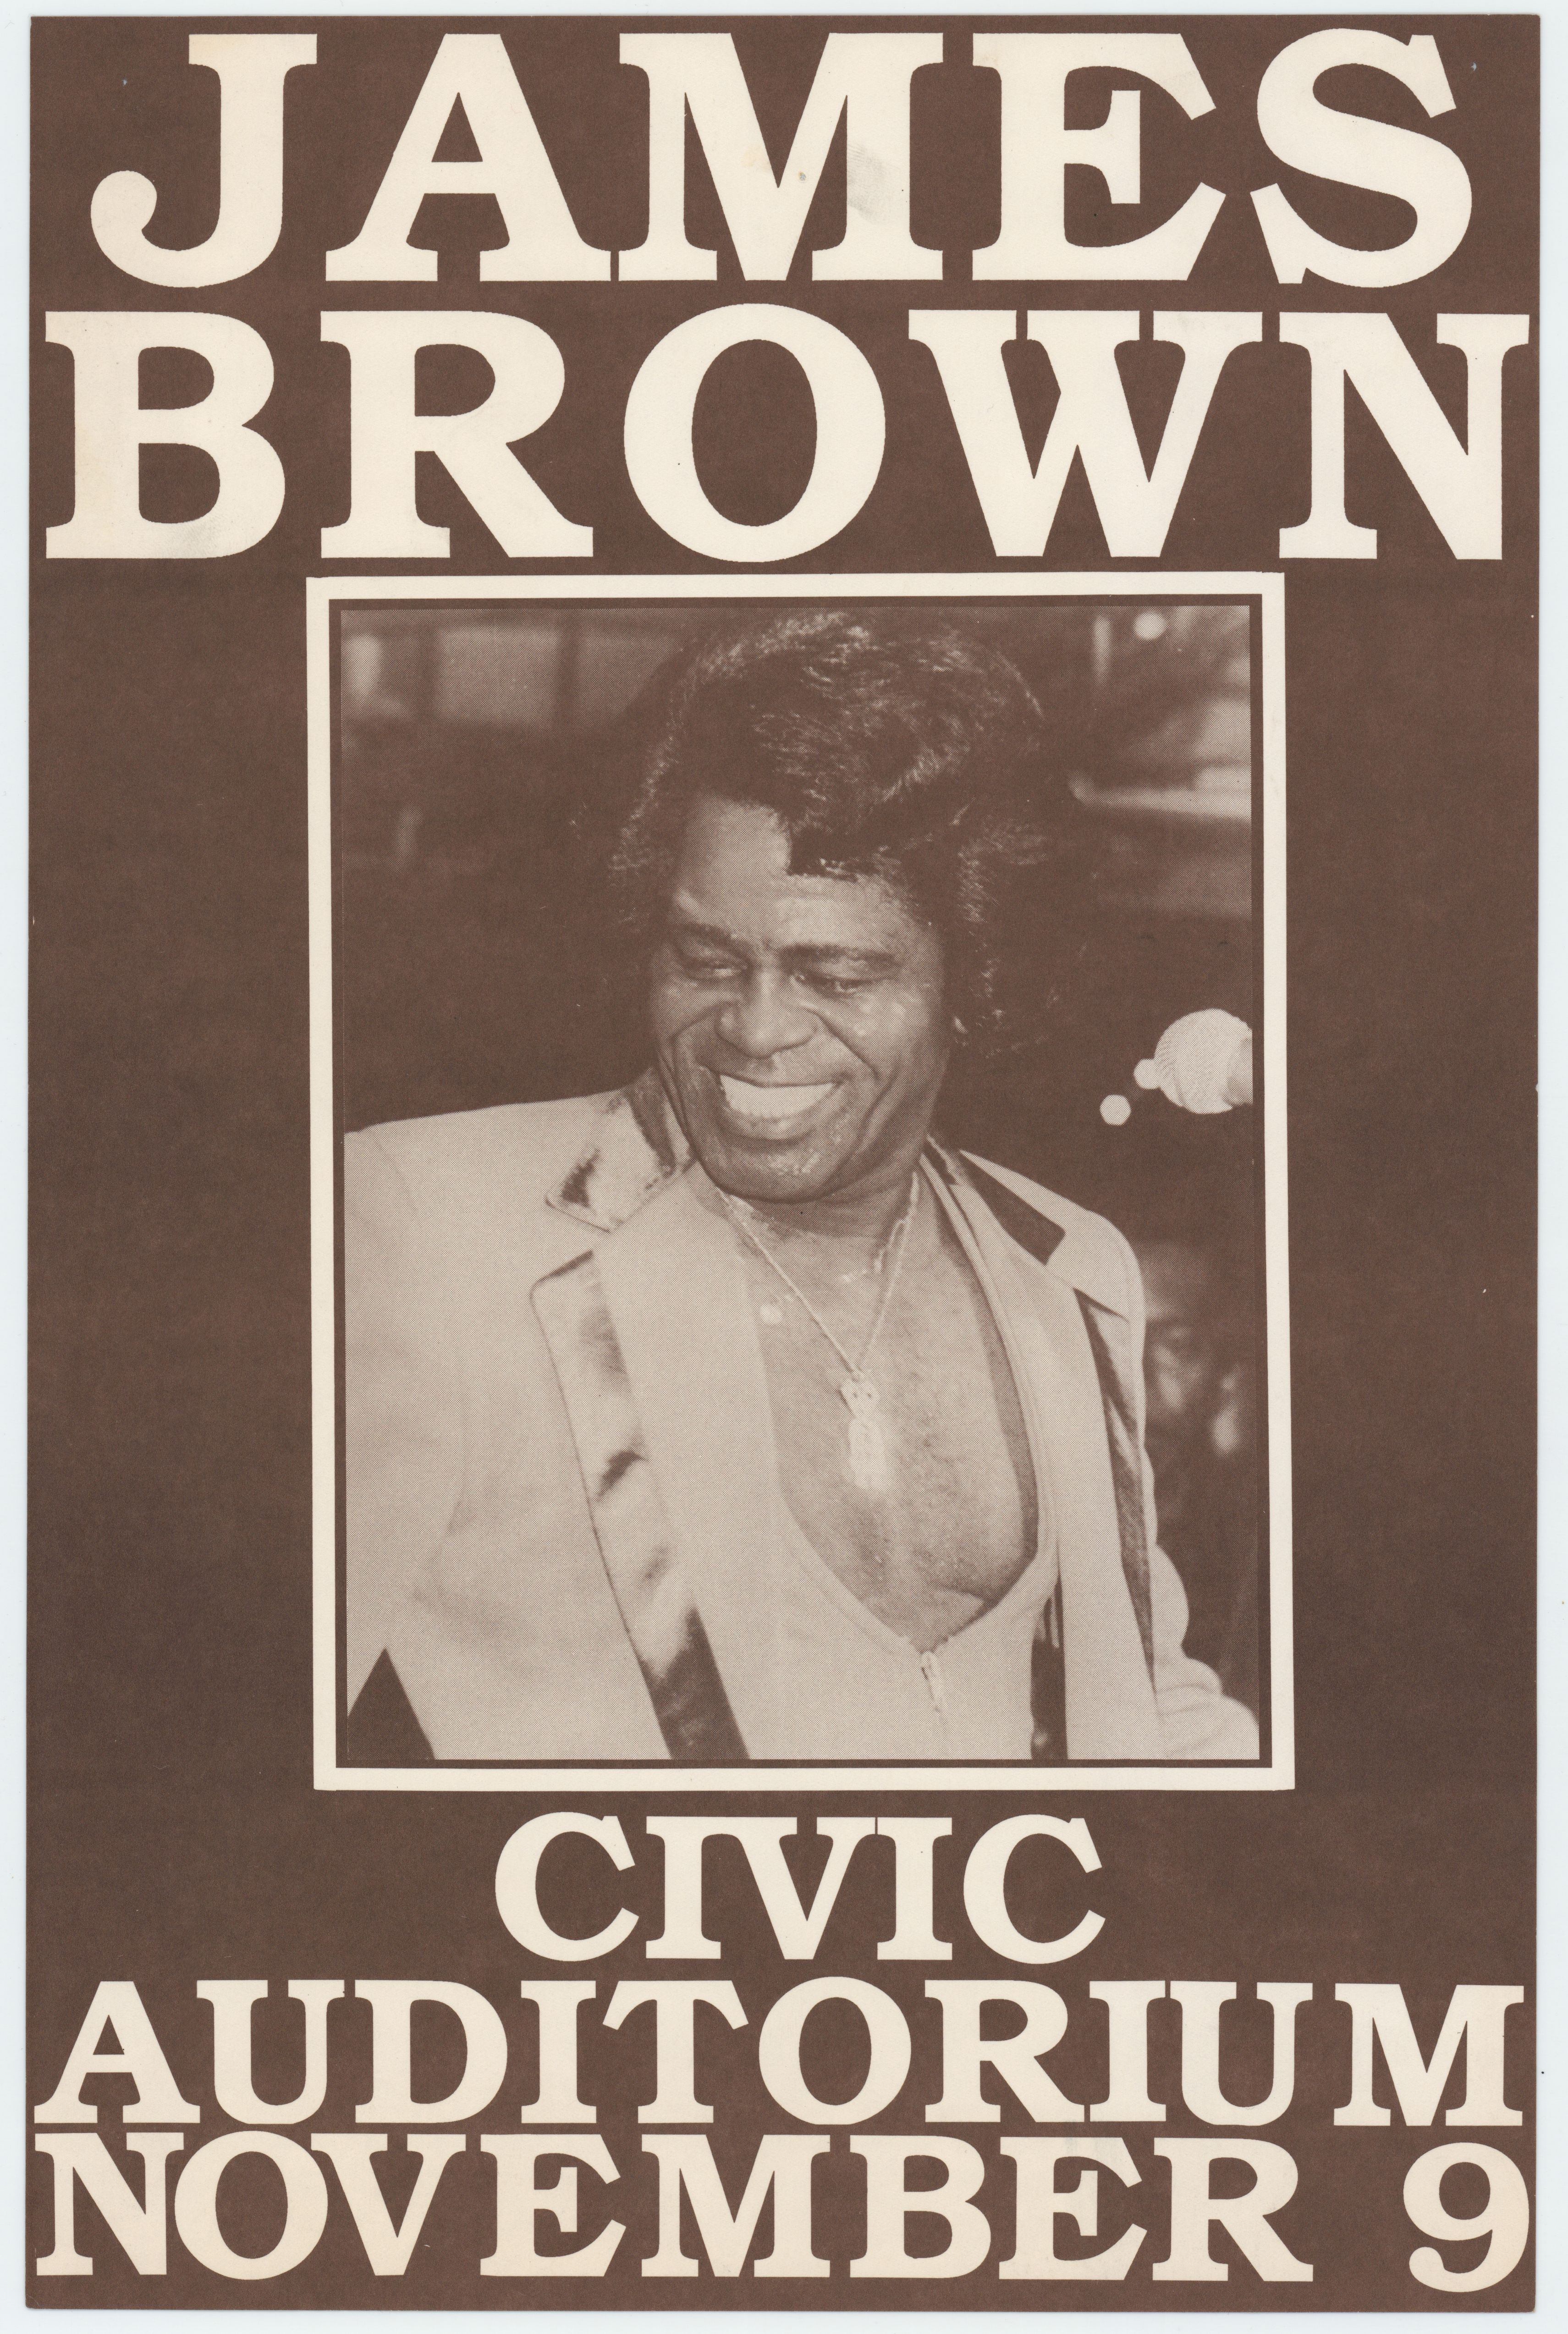 James Brown Civic Auditorium 1986 Concert Poster